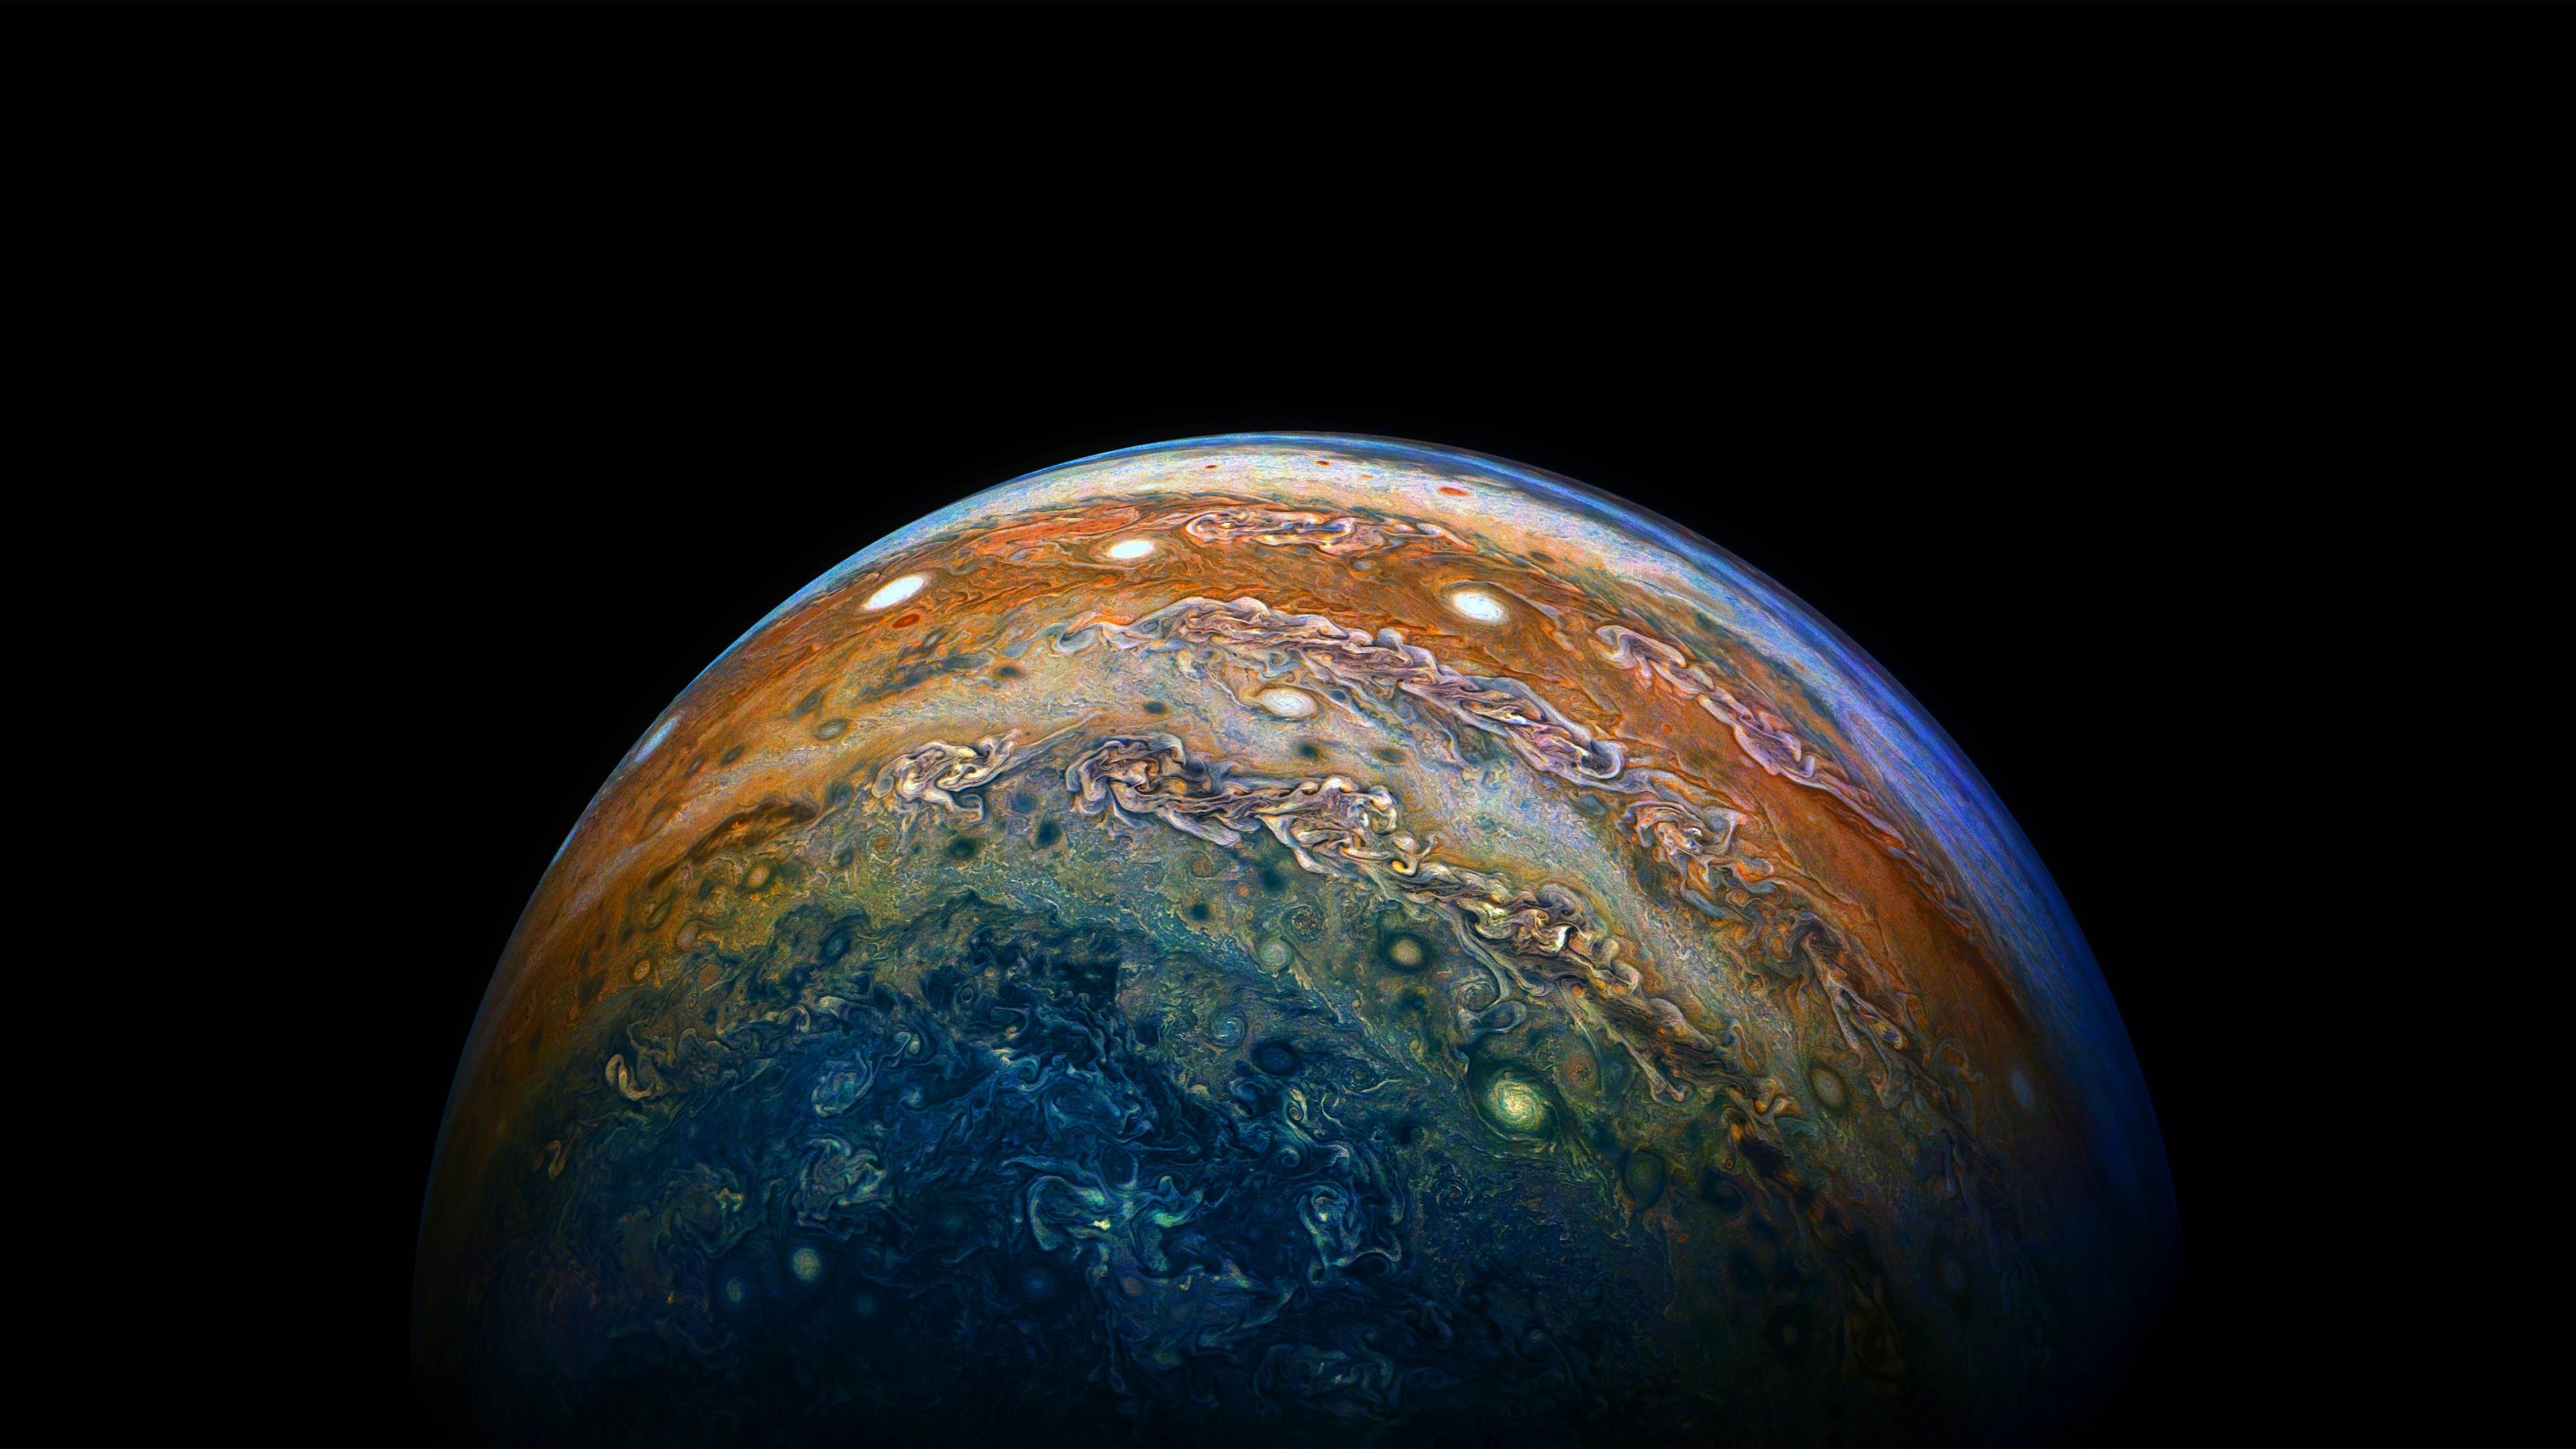 Free download Jupiter NASA Juno Mission 4K UltraHD Wallpaper [3840x2160] for your Desktop, Mobile & Tablet. Explore Juno Wallpaper